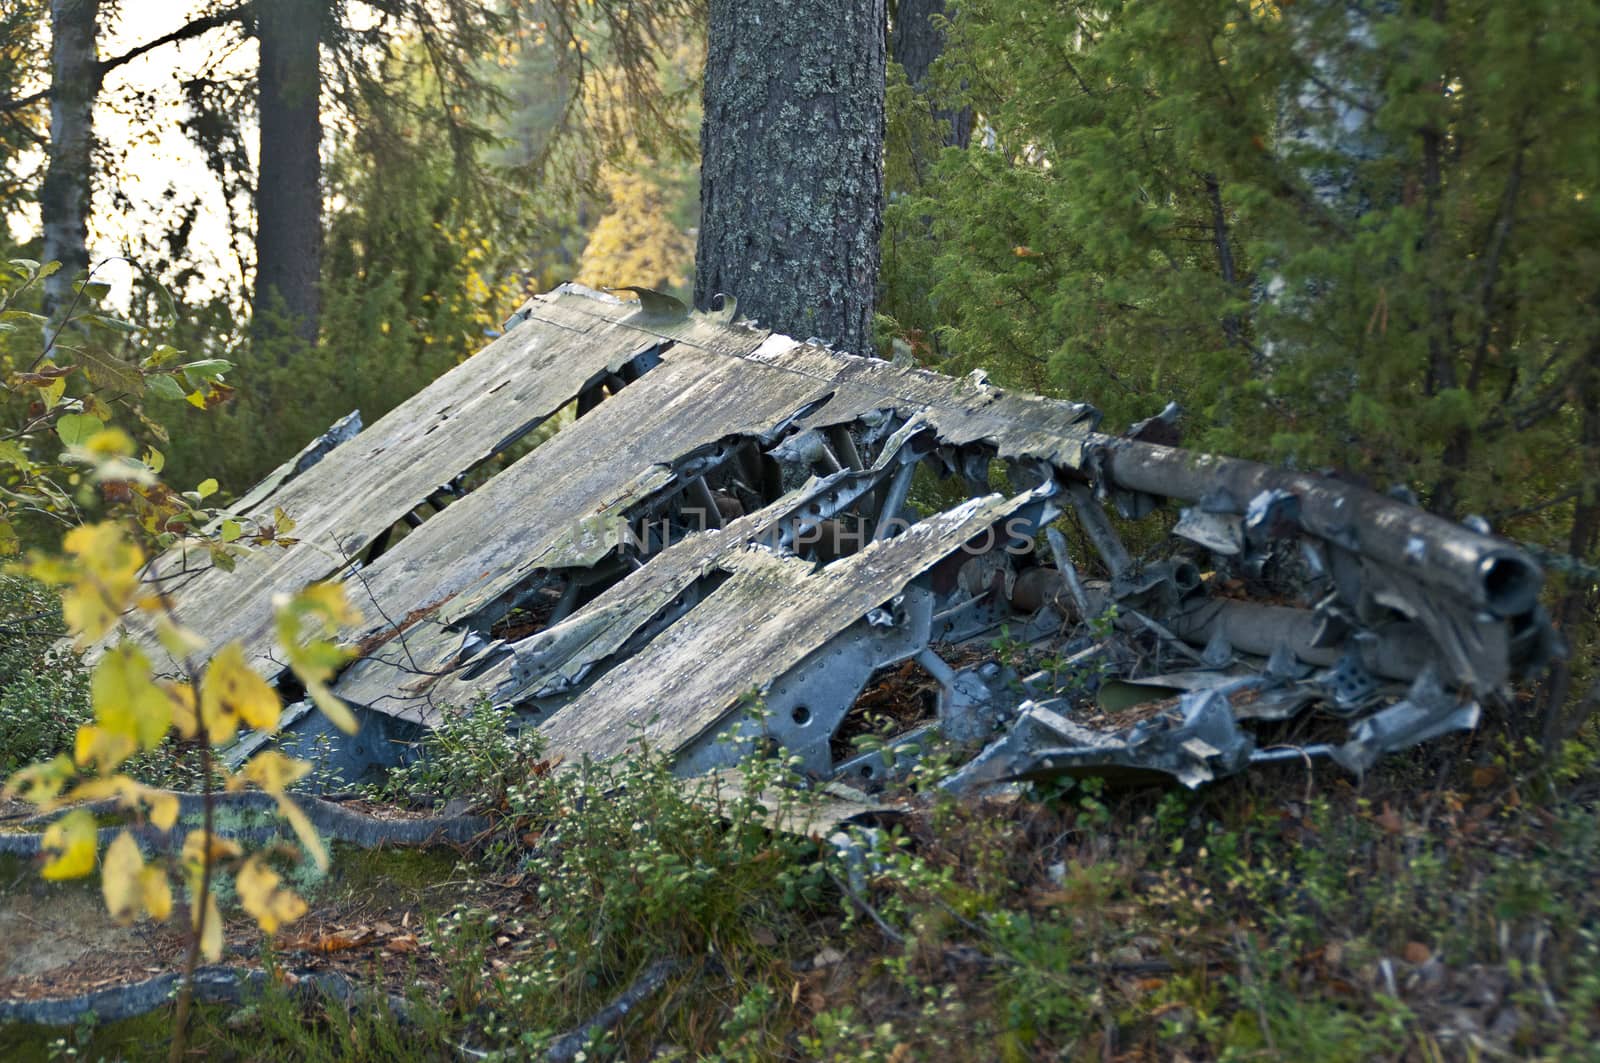 Wreckage from the Winter War near Suomussalmi, Finland.